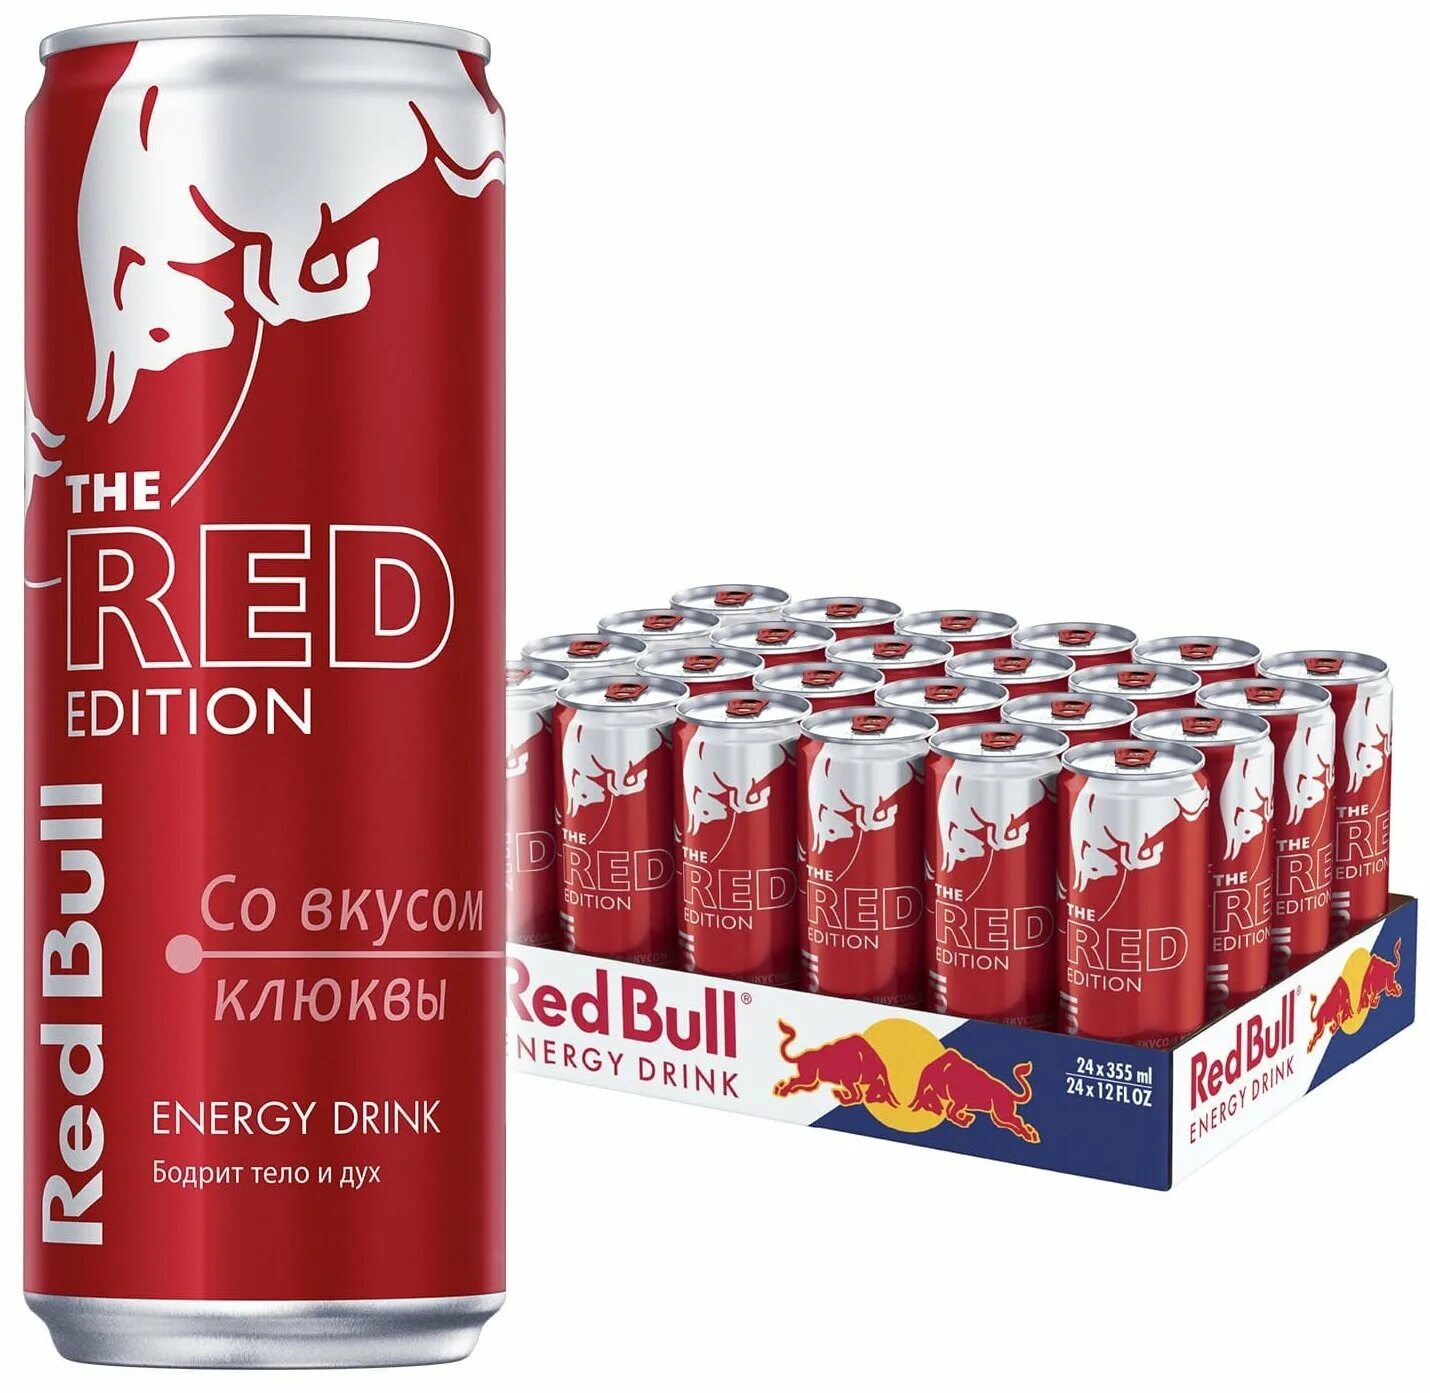 Редбул купить. Напиток Red bull 0.355л. Напиток энергетический Red bull 0.355 л Blue Edition. Энергетический напиток Red bull, 0.355 л 2 штуки. Ред Булл Red Edition 0,355 клюква.